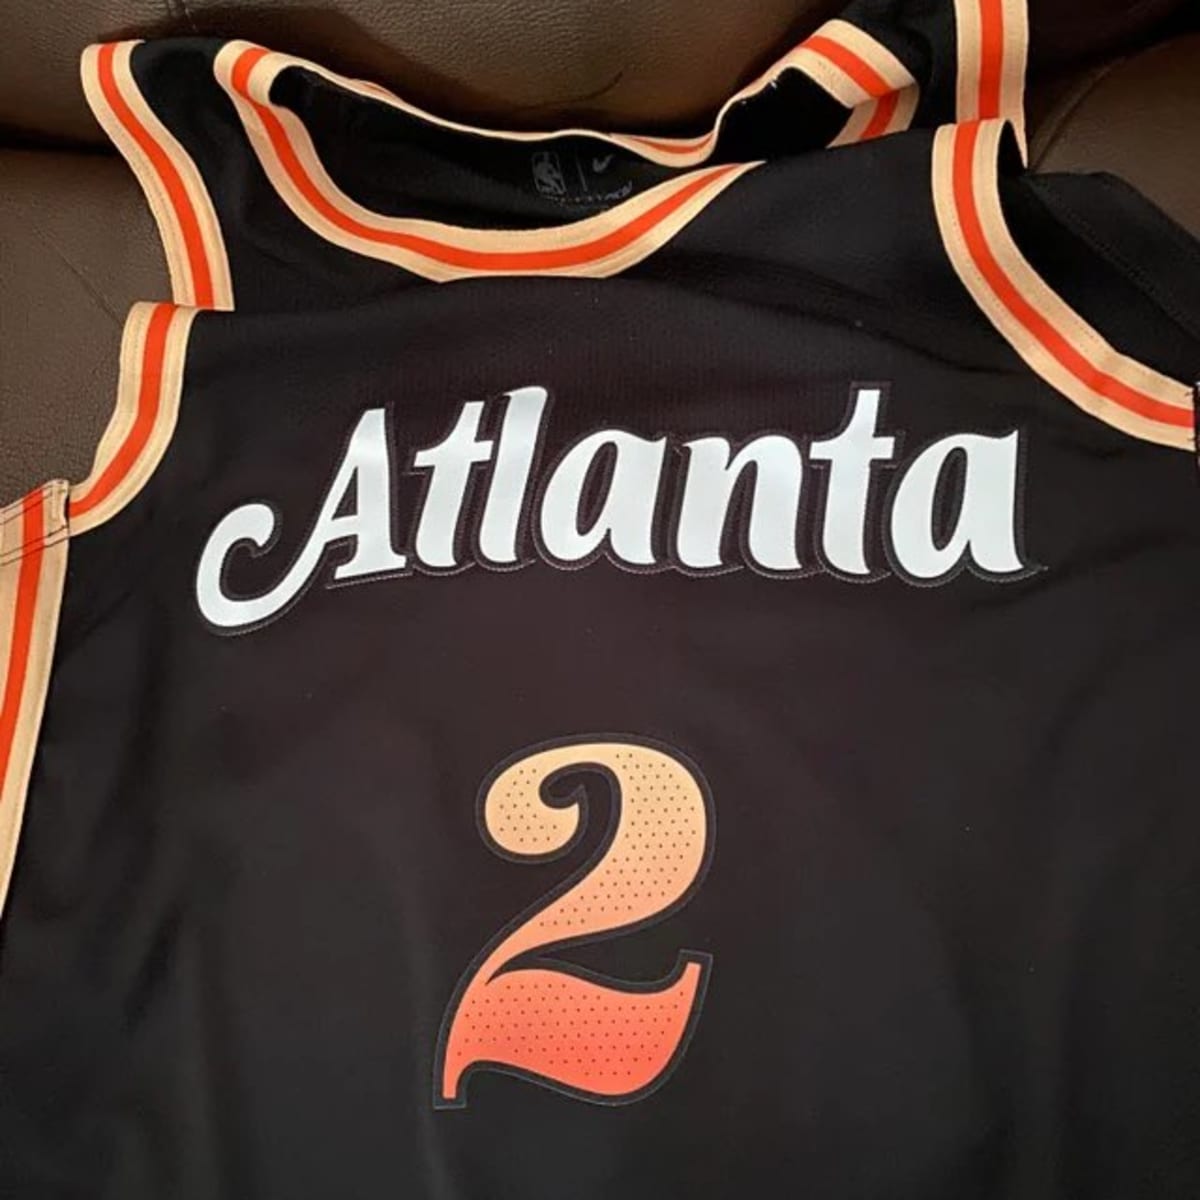 Petition · Bring Volt Green back to the Atlanta Hawks uniforms! ·